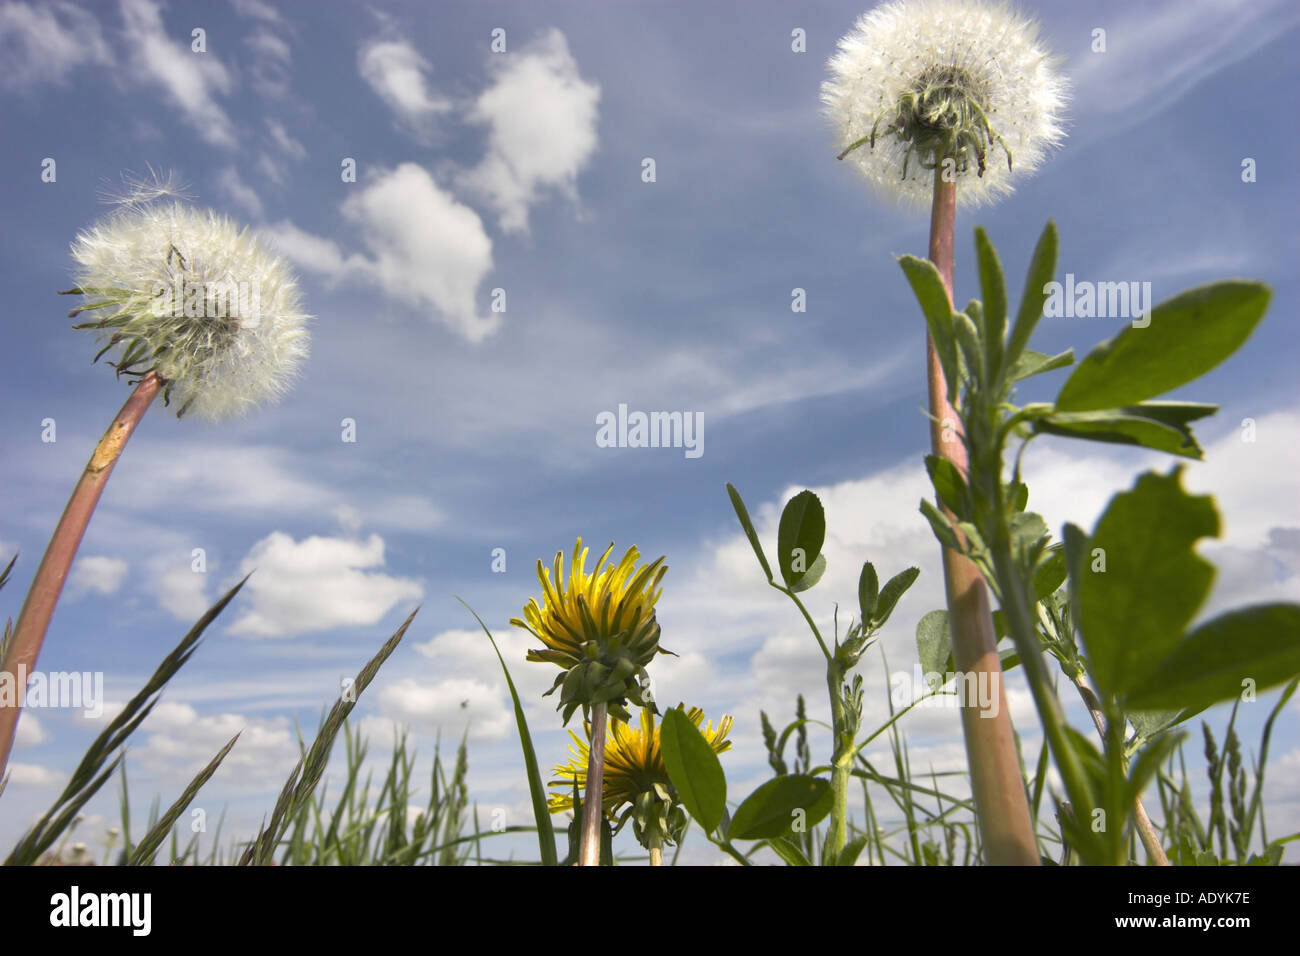 common dandelion (Taraxacum officinale), seed balls against cloudy sky, Germany, Saxony, Vogtland. Stock Photo